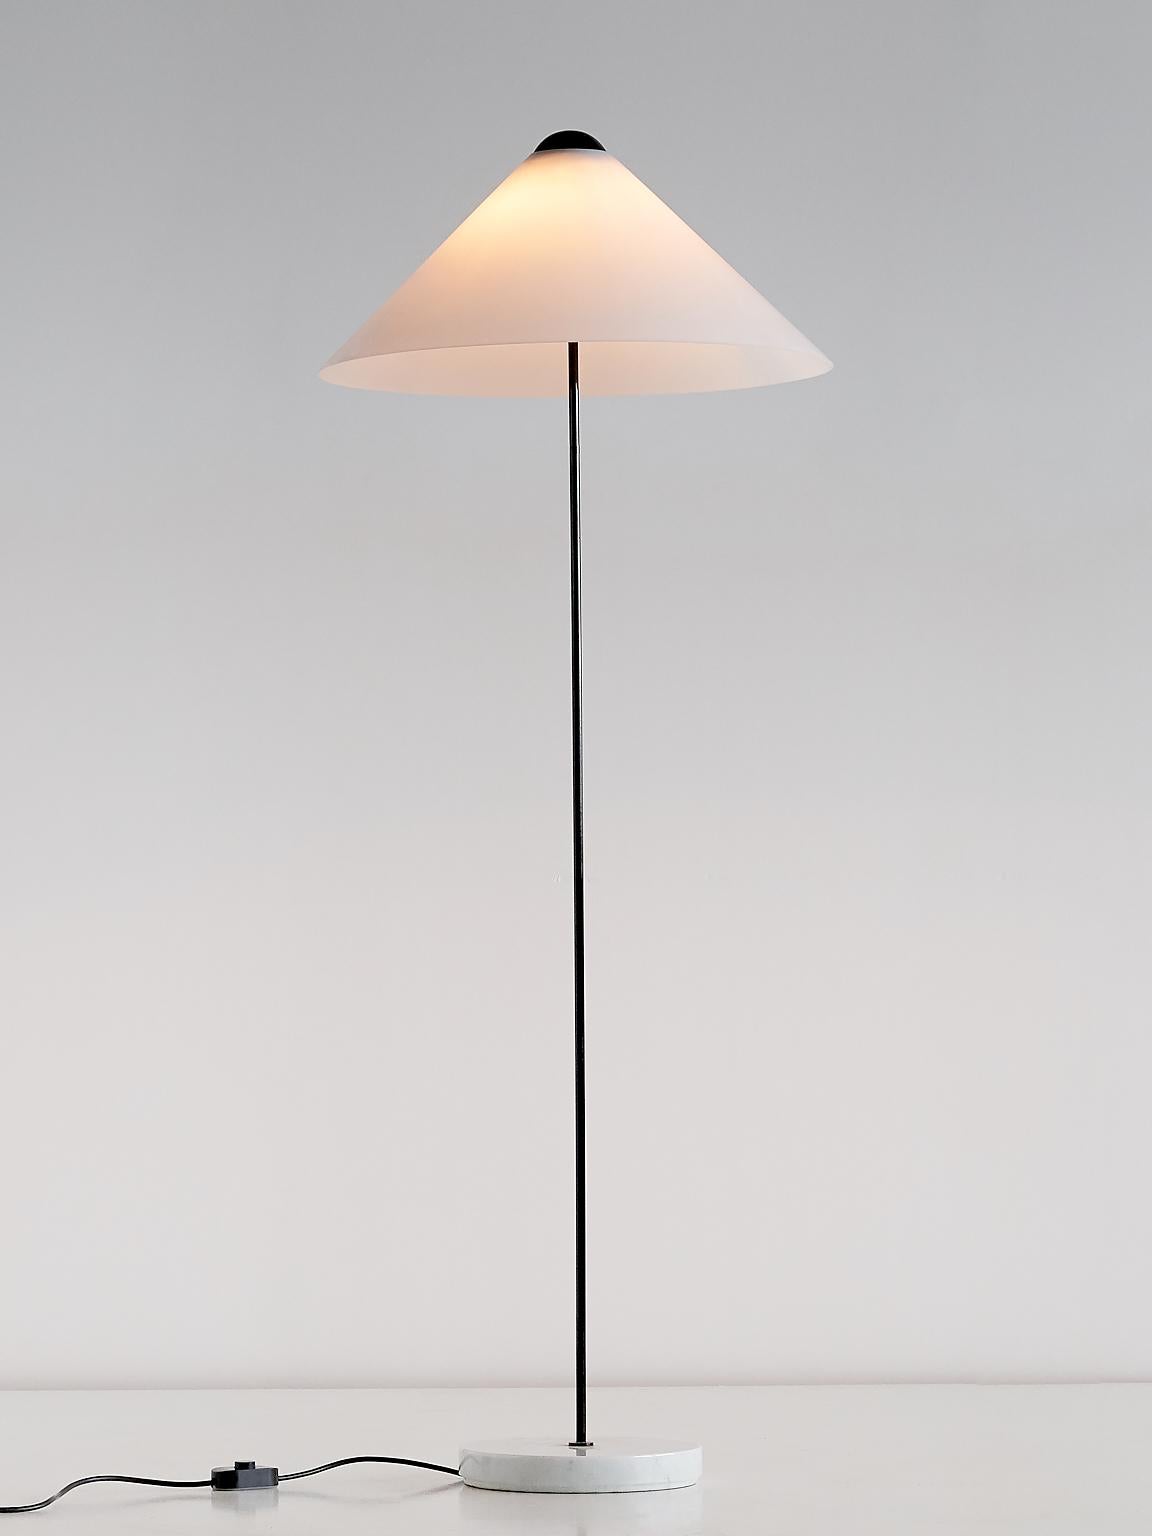 Acrylic Vico Magistretti Snow Floor Lamp for Oluce, Italy, 1973